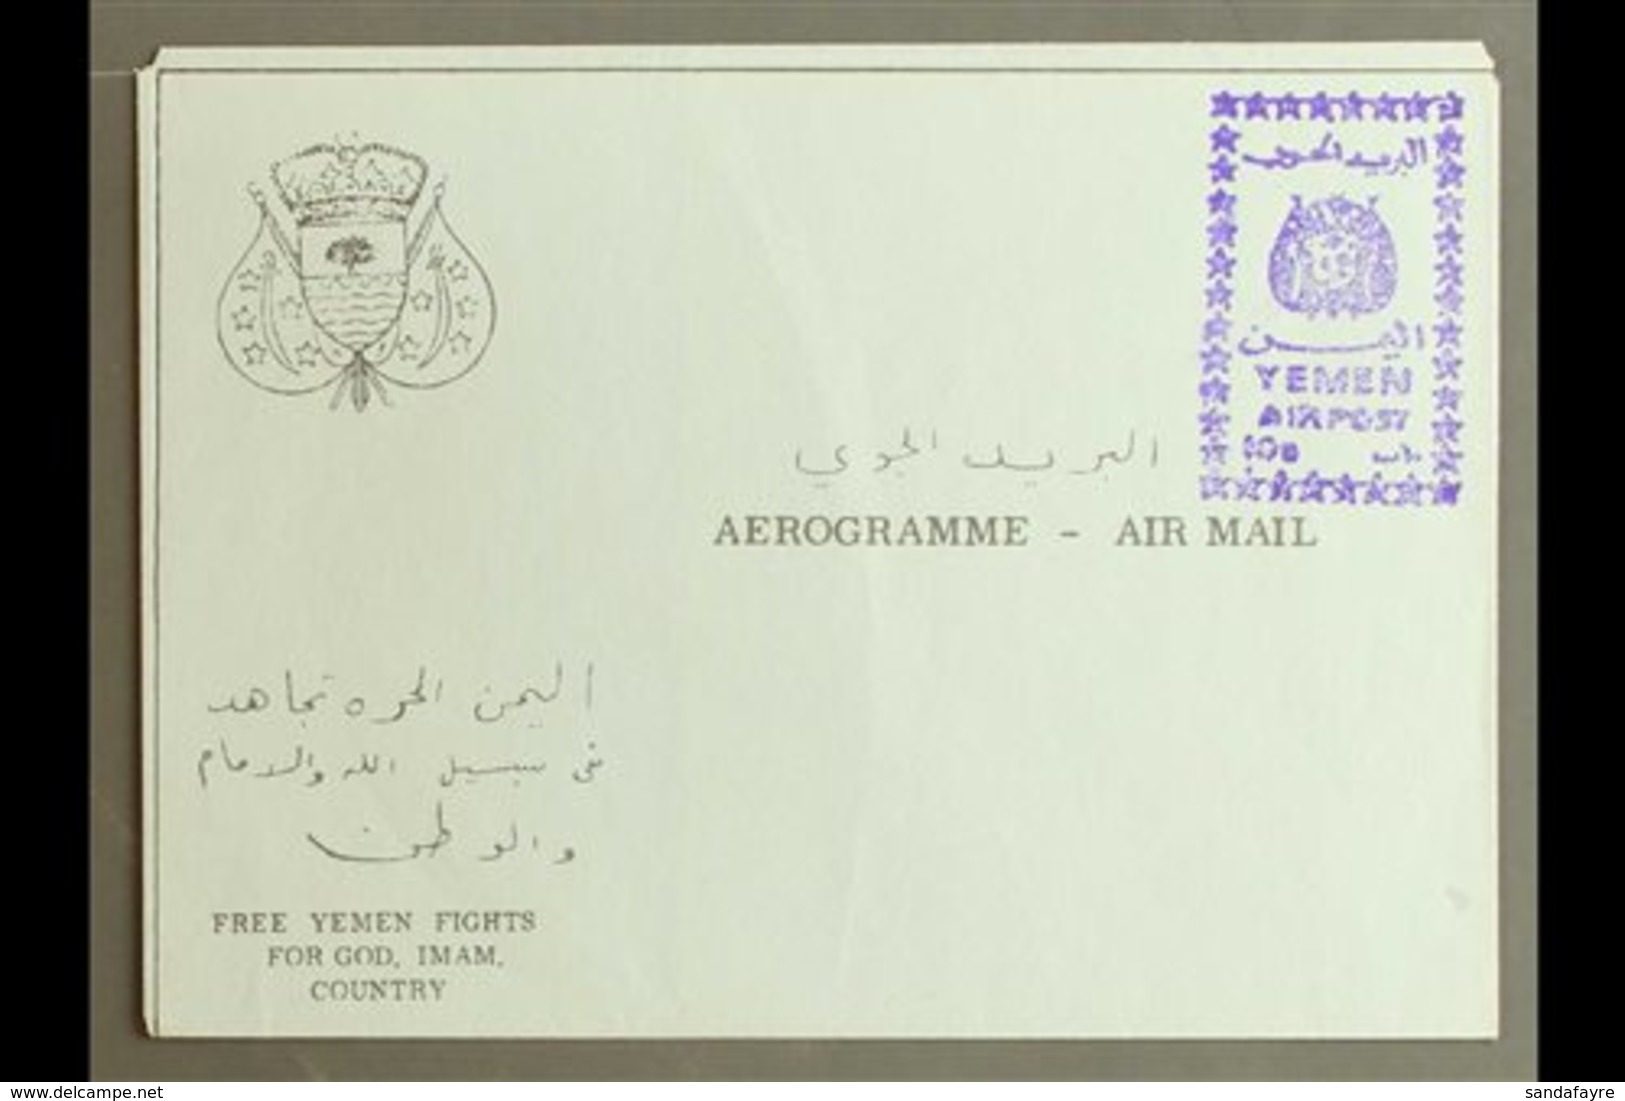 ROYALIST  1967 10b Violet "YEMEN AIRPOST" Handstamp (as SG R135a/f) Applied To Complete Light Blue Aerogramme, Very Fine - Yemen